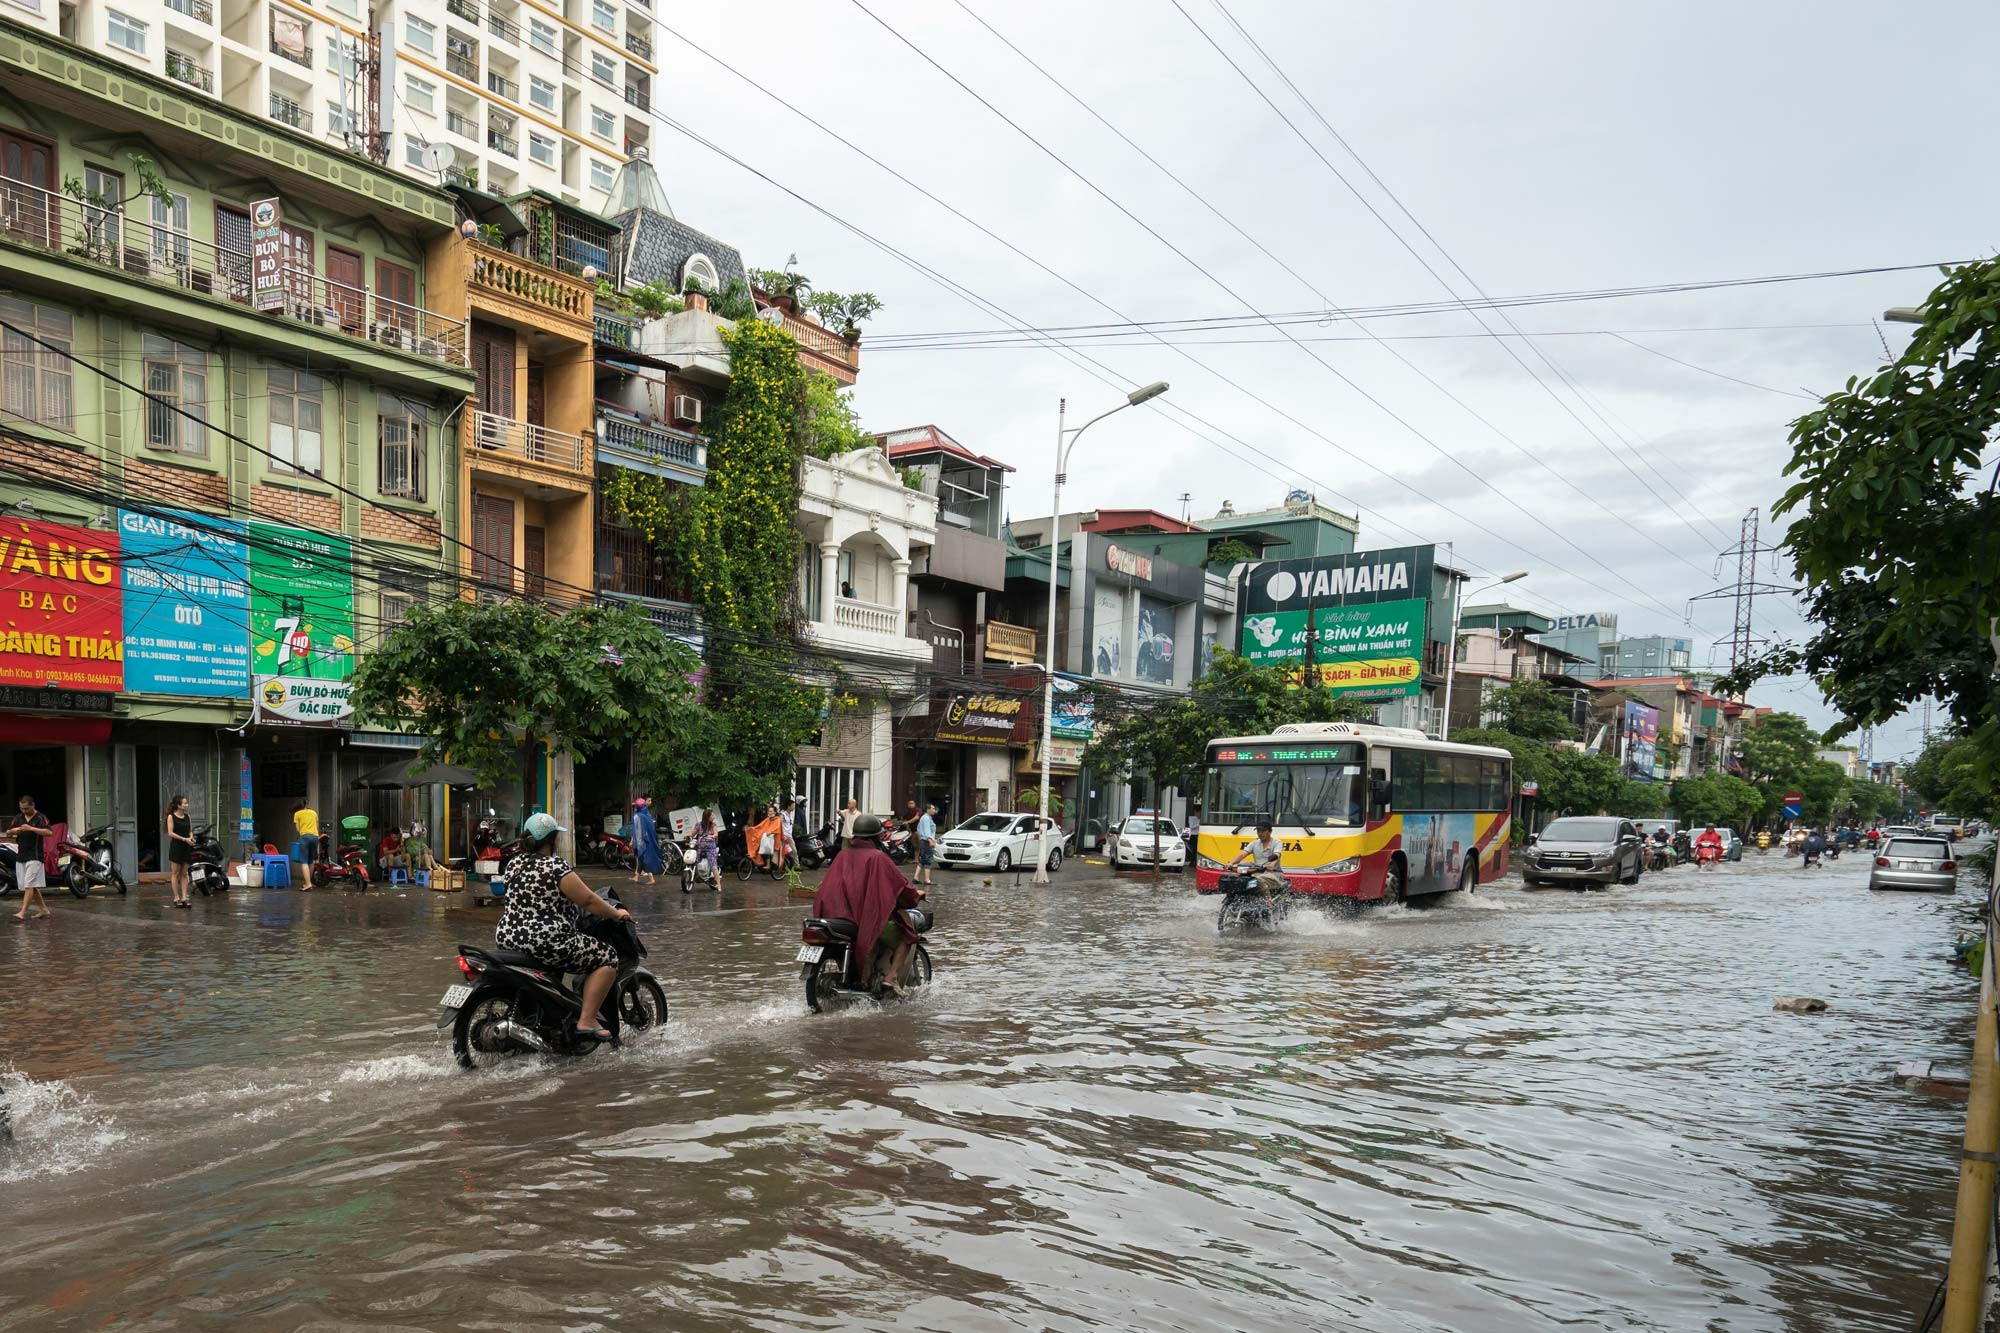 Flooded area in Vietnam